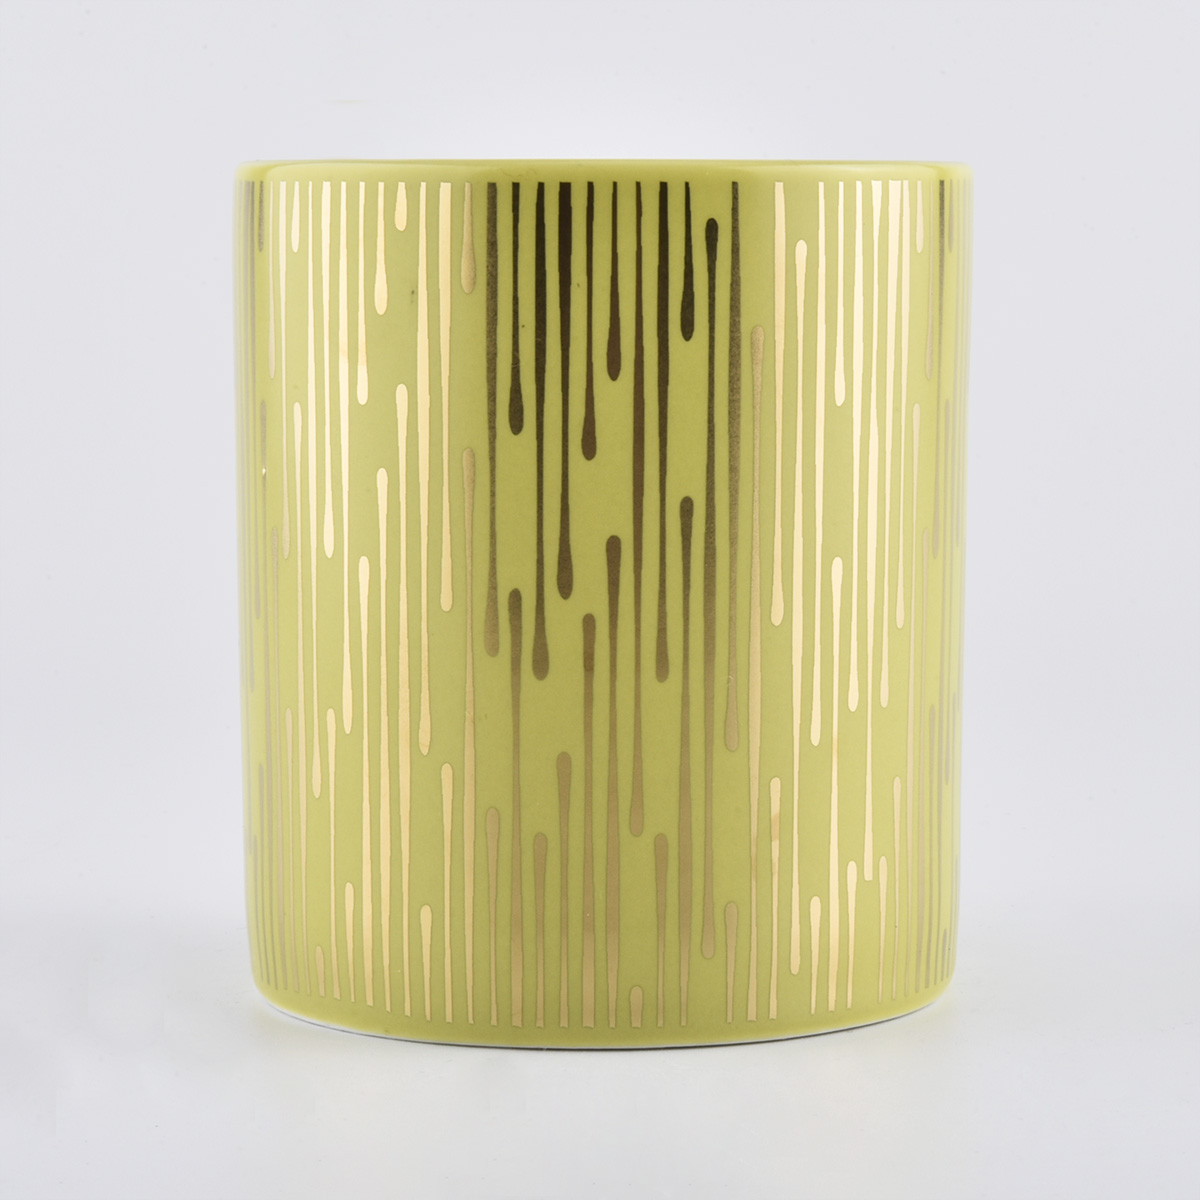 Goldener Keramikkerzenbehälter aus Leder mit Keramikdeckel